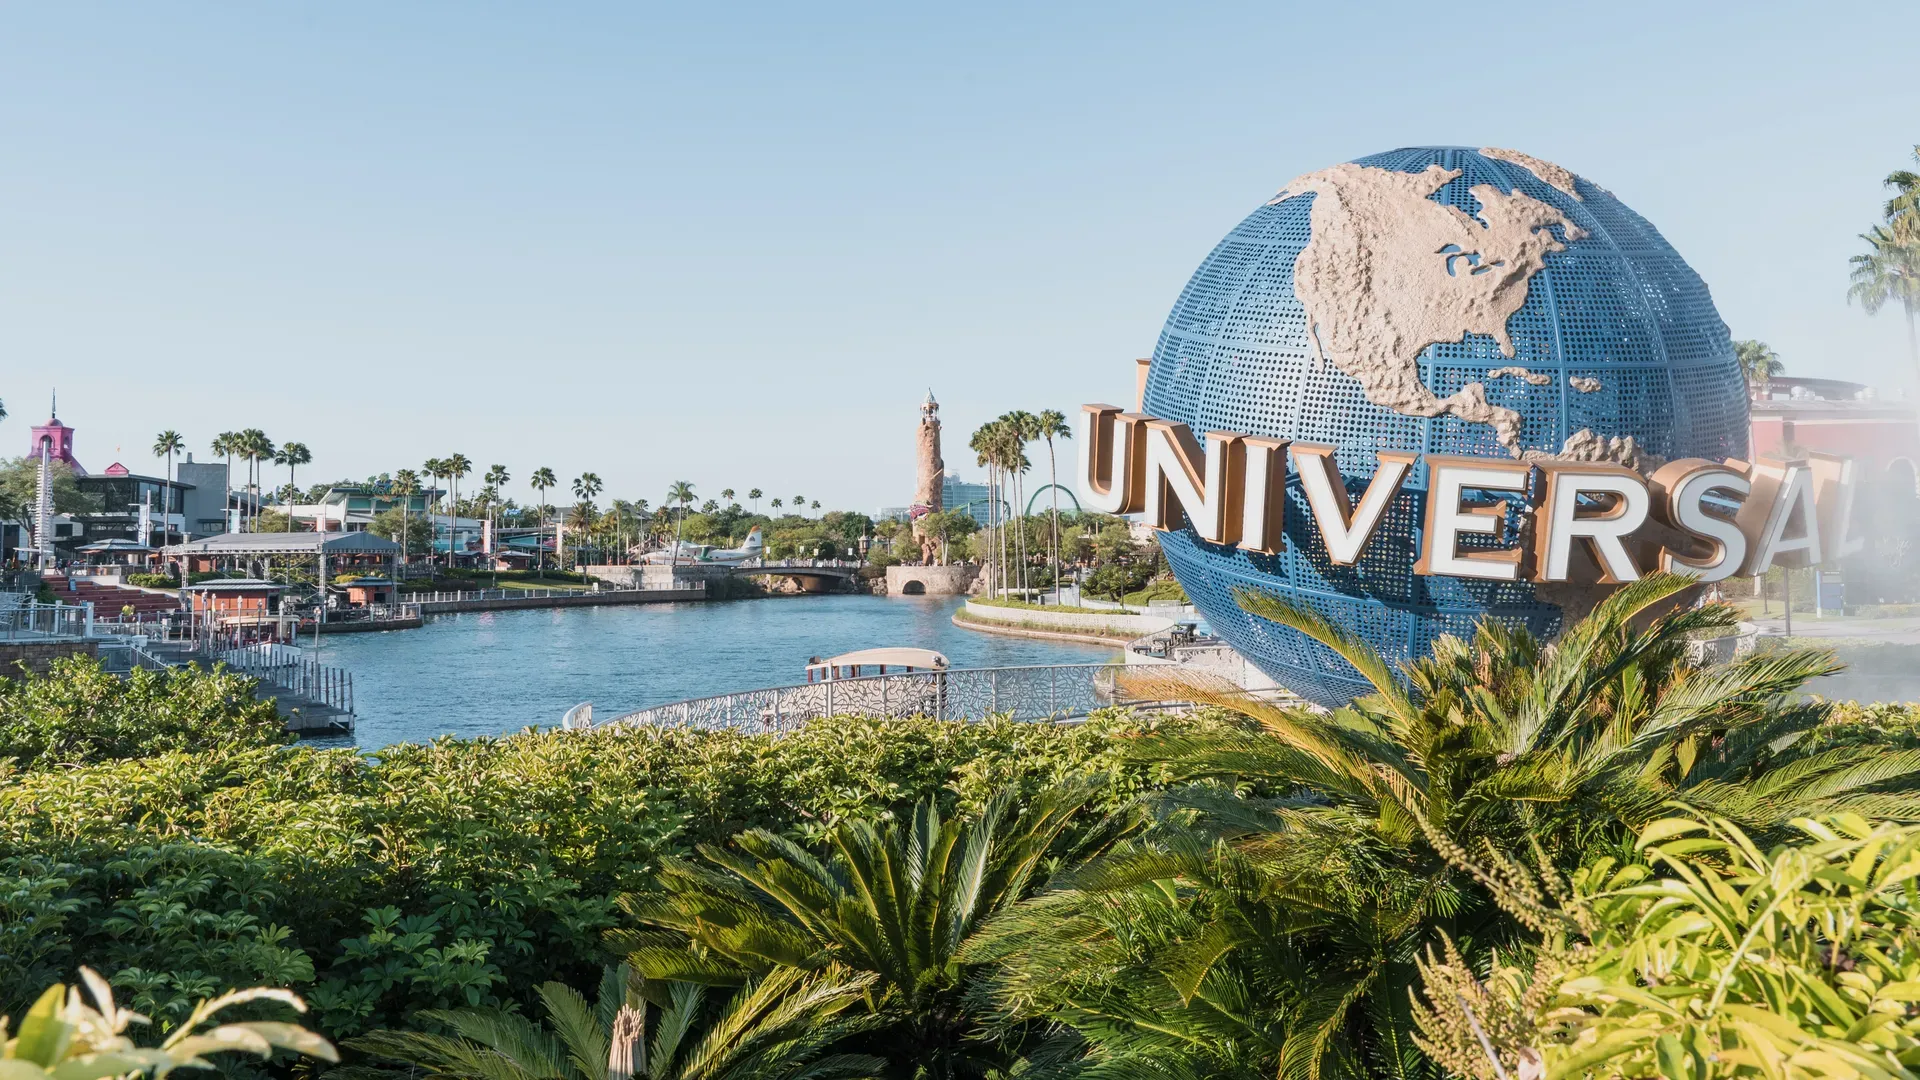 Disney World – Orlando, Florida